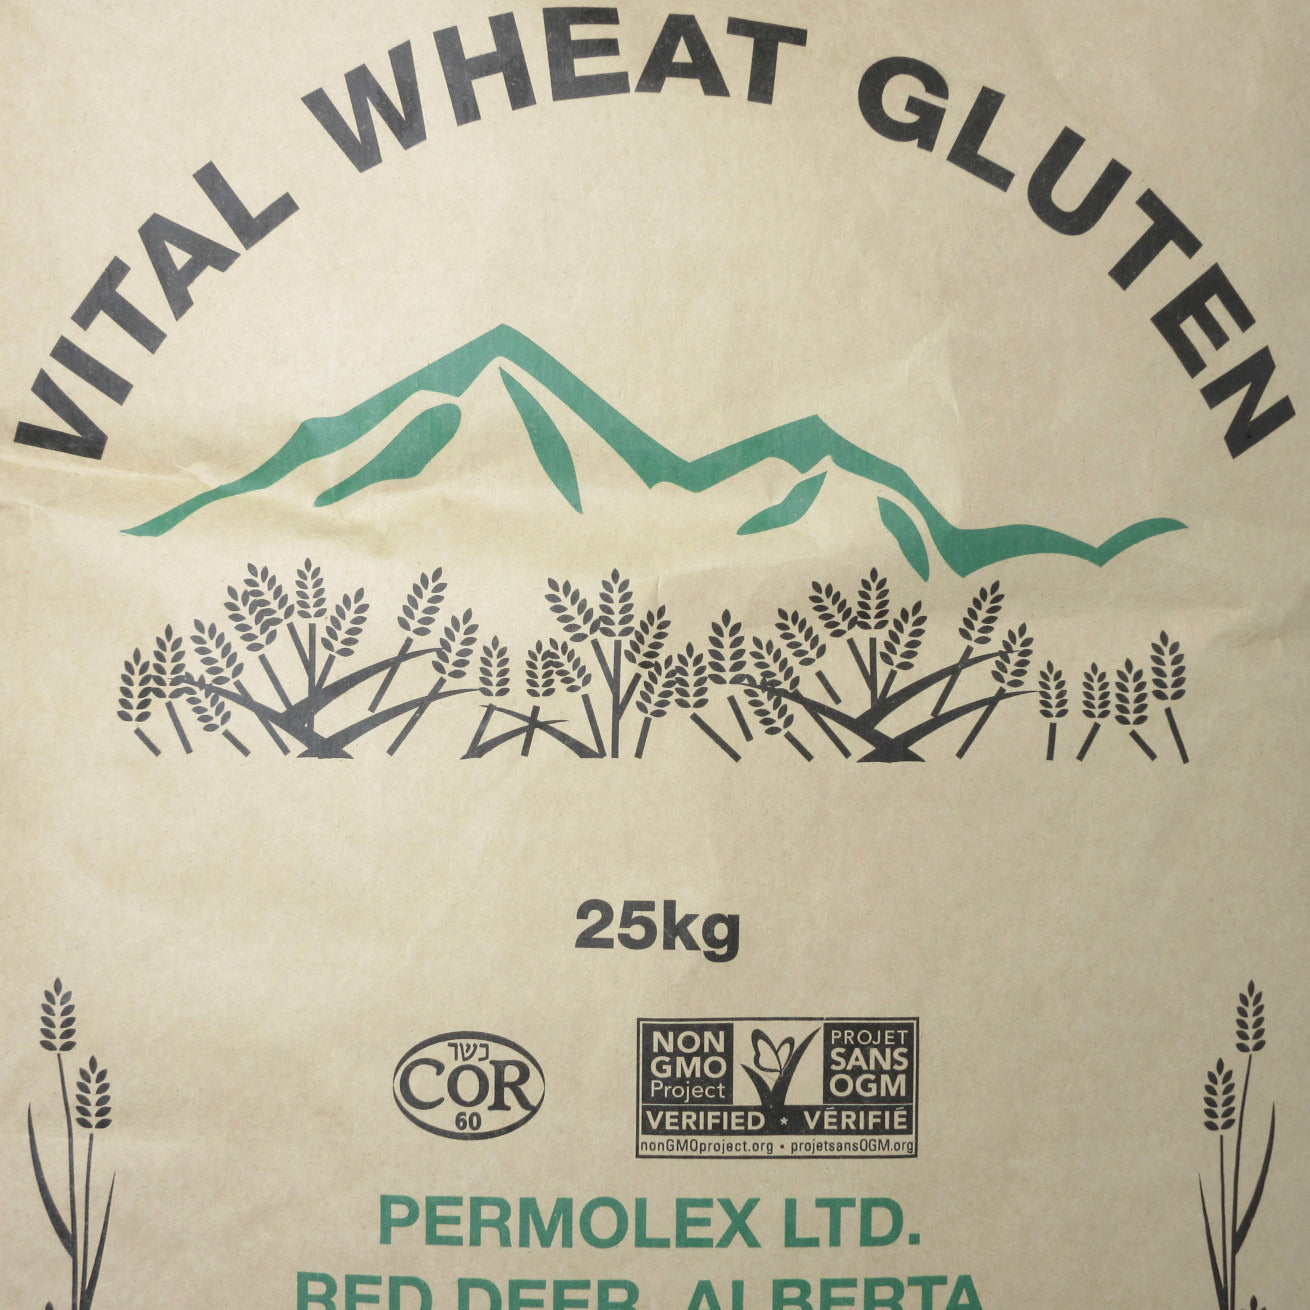 Flour Barrel product image - Vital Wheat Gluten